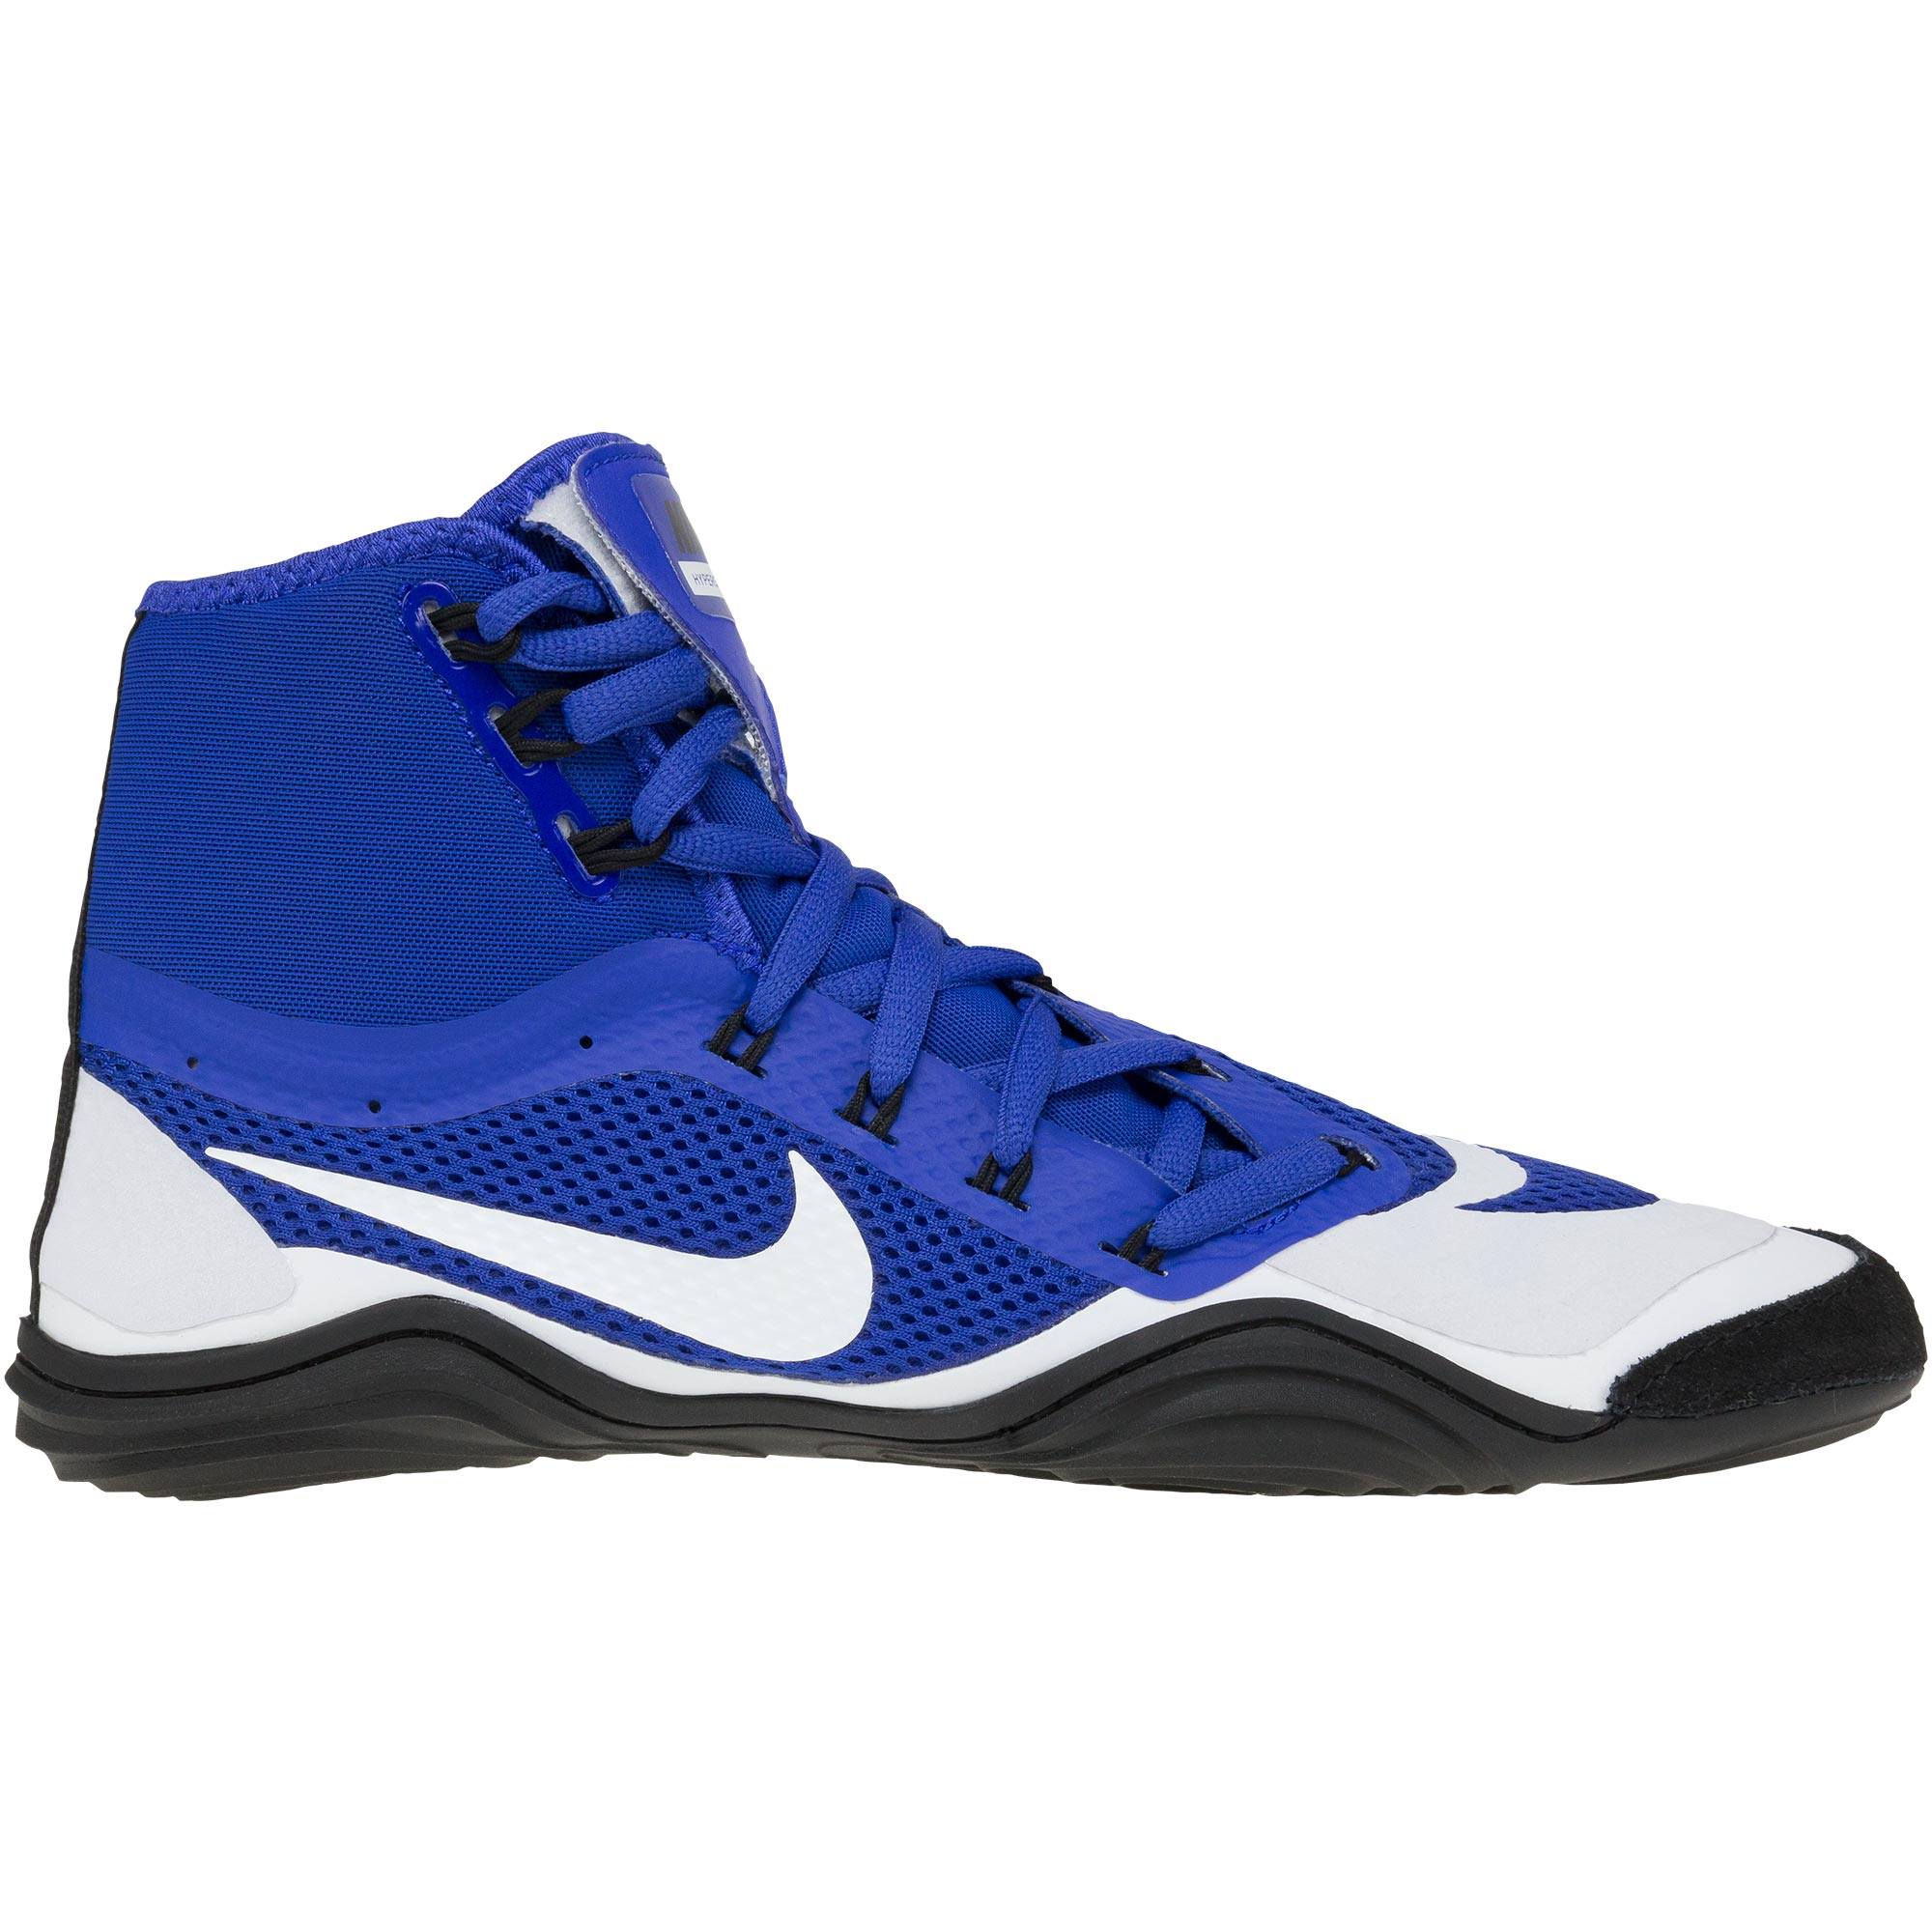 Blue and Black Nike Logo - Nike Hypersweep Shoes